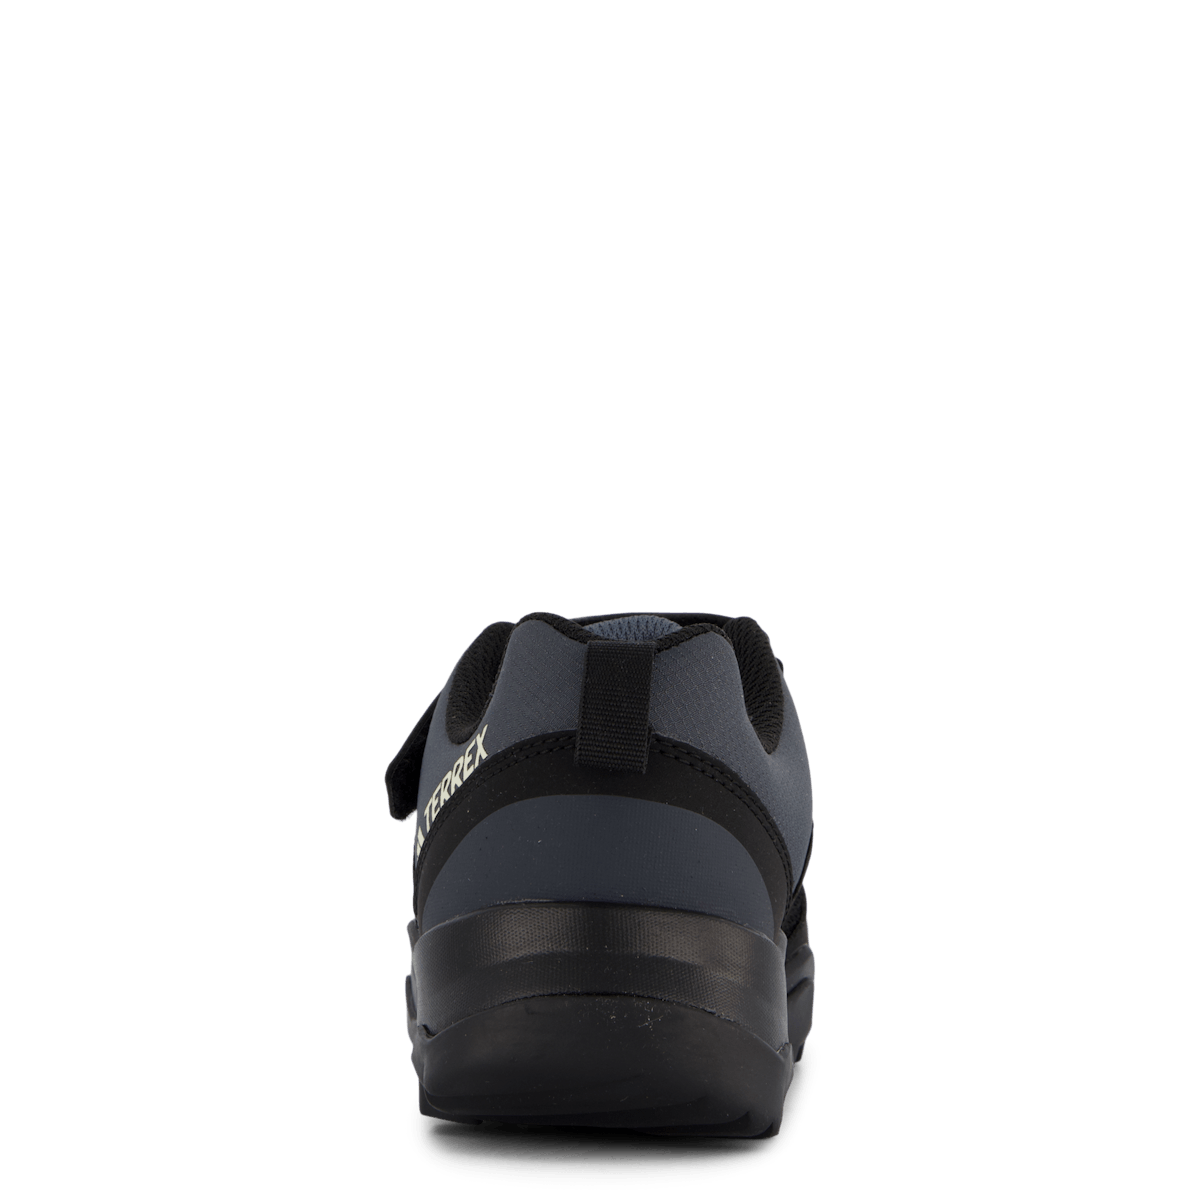 Terrex AX2R Hook-and-Loop Hiking Shoes Core Black / Core Black / Onix